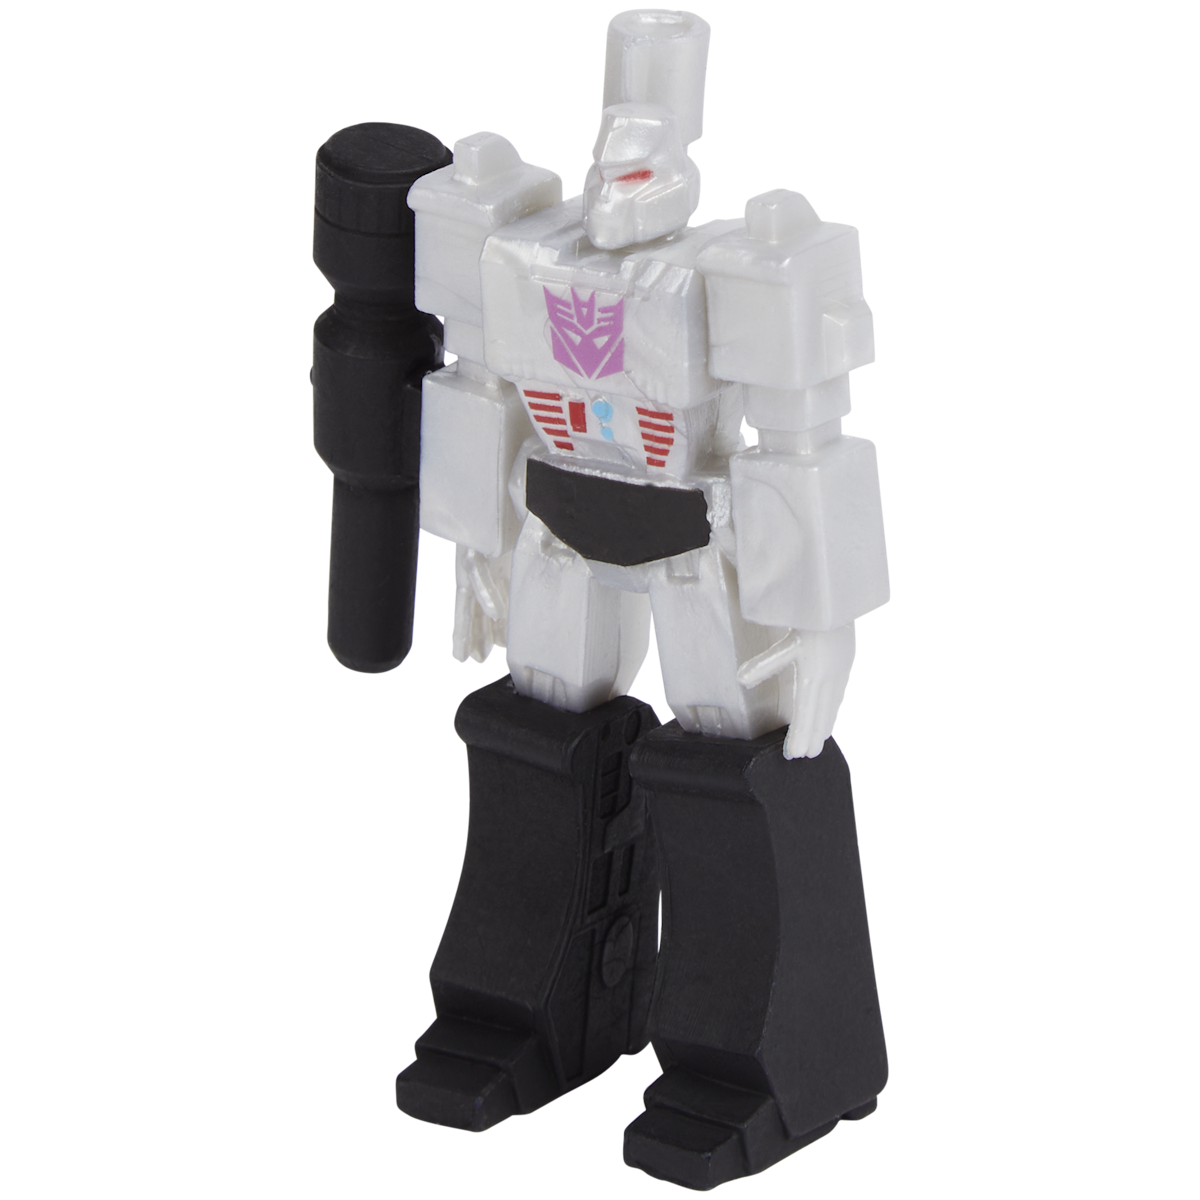 Transformers Figur